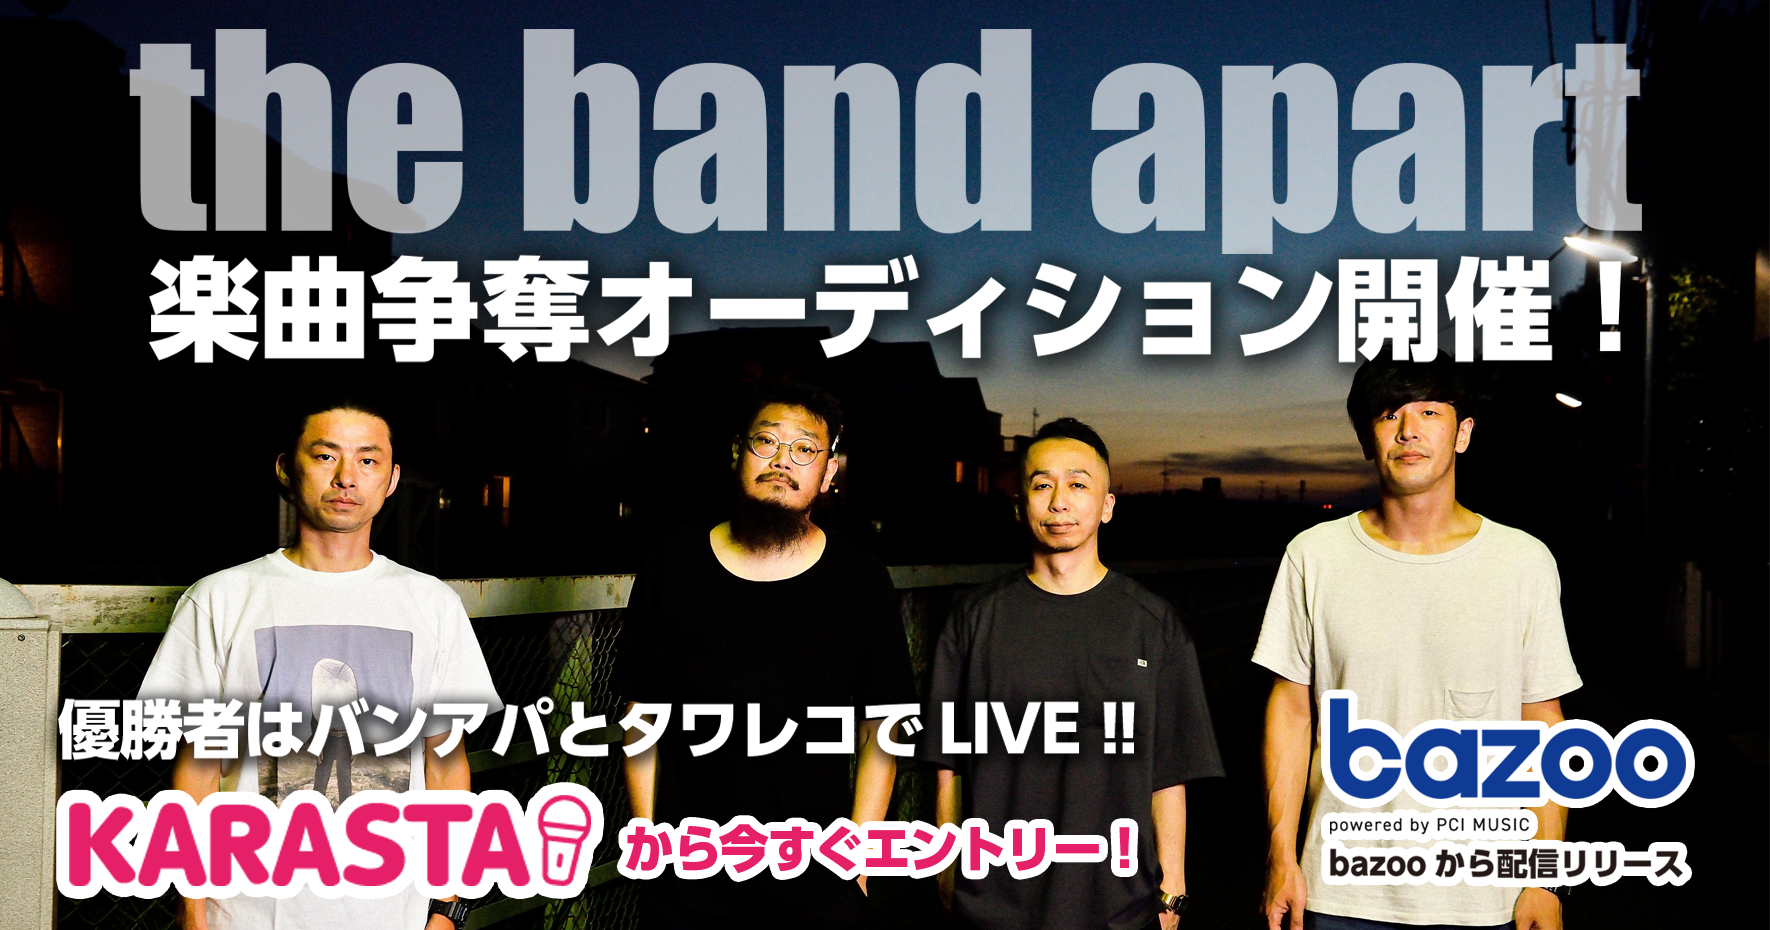 Bazoo Karasta The Band Apart 楽曲争奪オーディション開催 10月18 日よりエントリー開始 株式会社ポニーキャニオンのプレスリリース